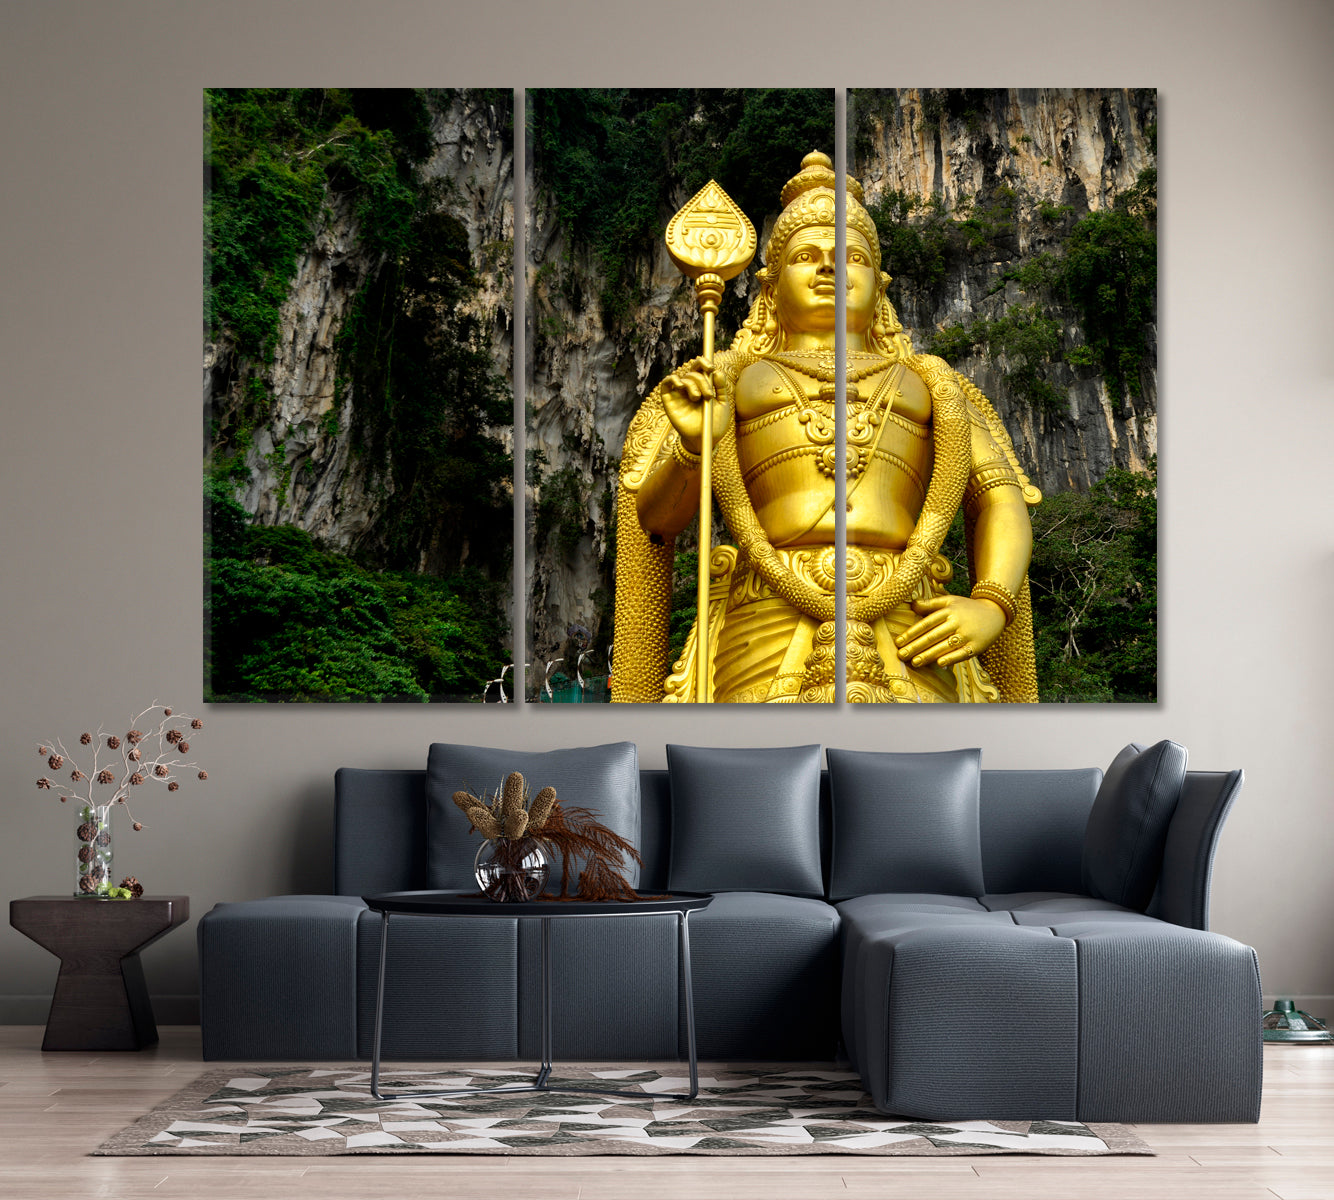 Golden Statue Lord Murugan Batu Caves Kuala Lumpur Malaysia Famous Landmarks Artwork Print Artesty 3 panels 36" x 24" 